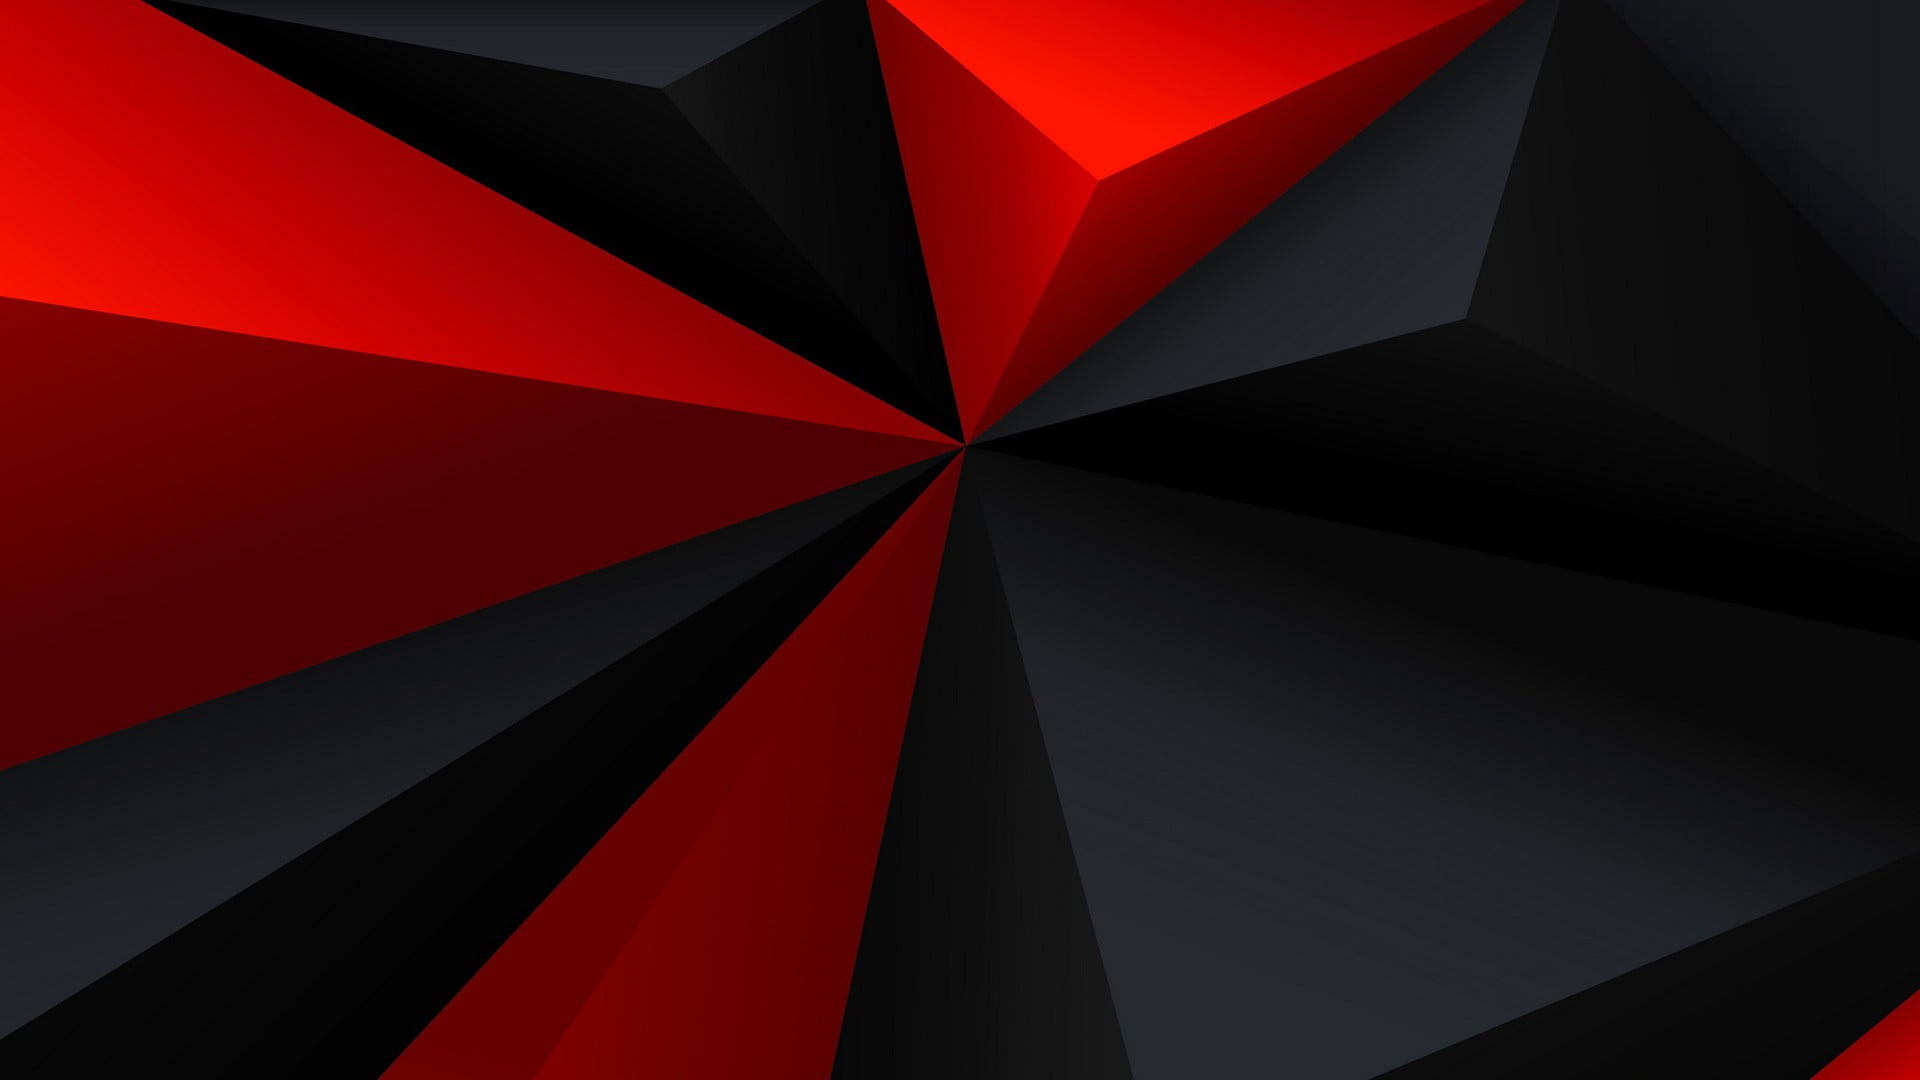 Red and black 3D wallpaper, digital art, minimalism, low poly